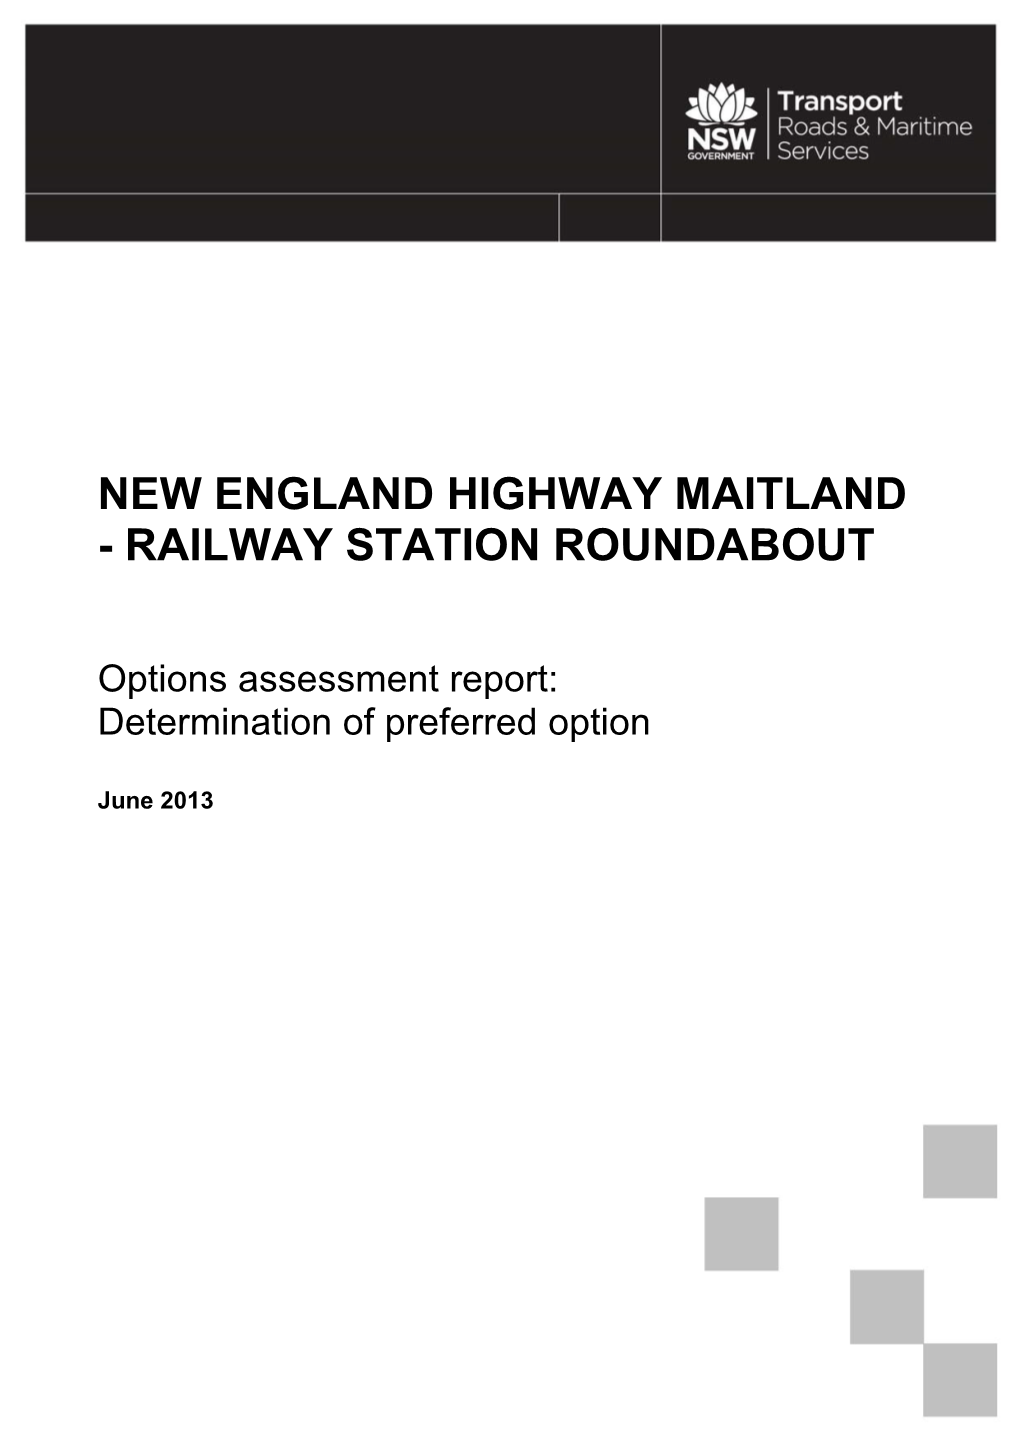 New England Highway Maitland - Railway Station Roundabout